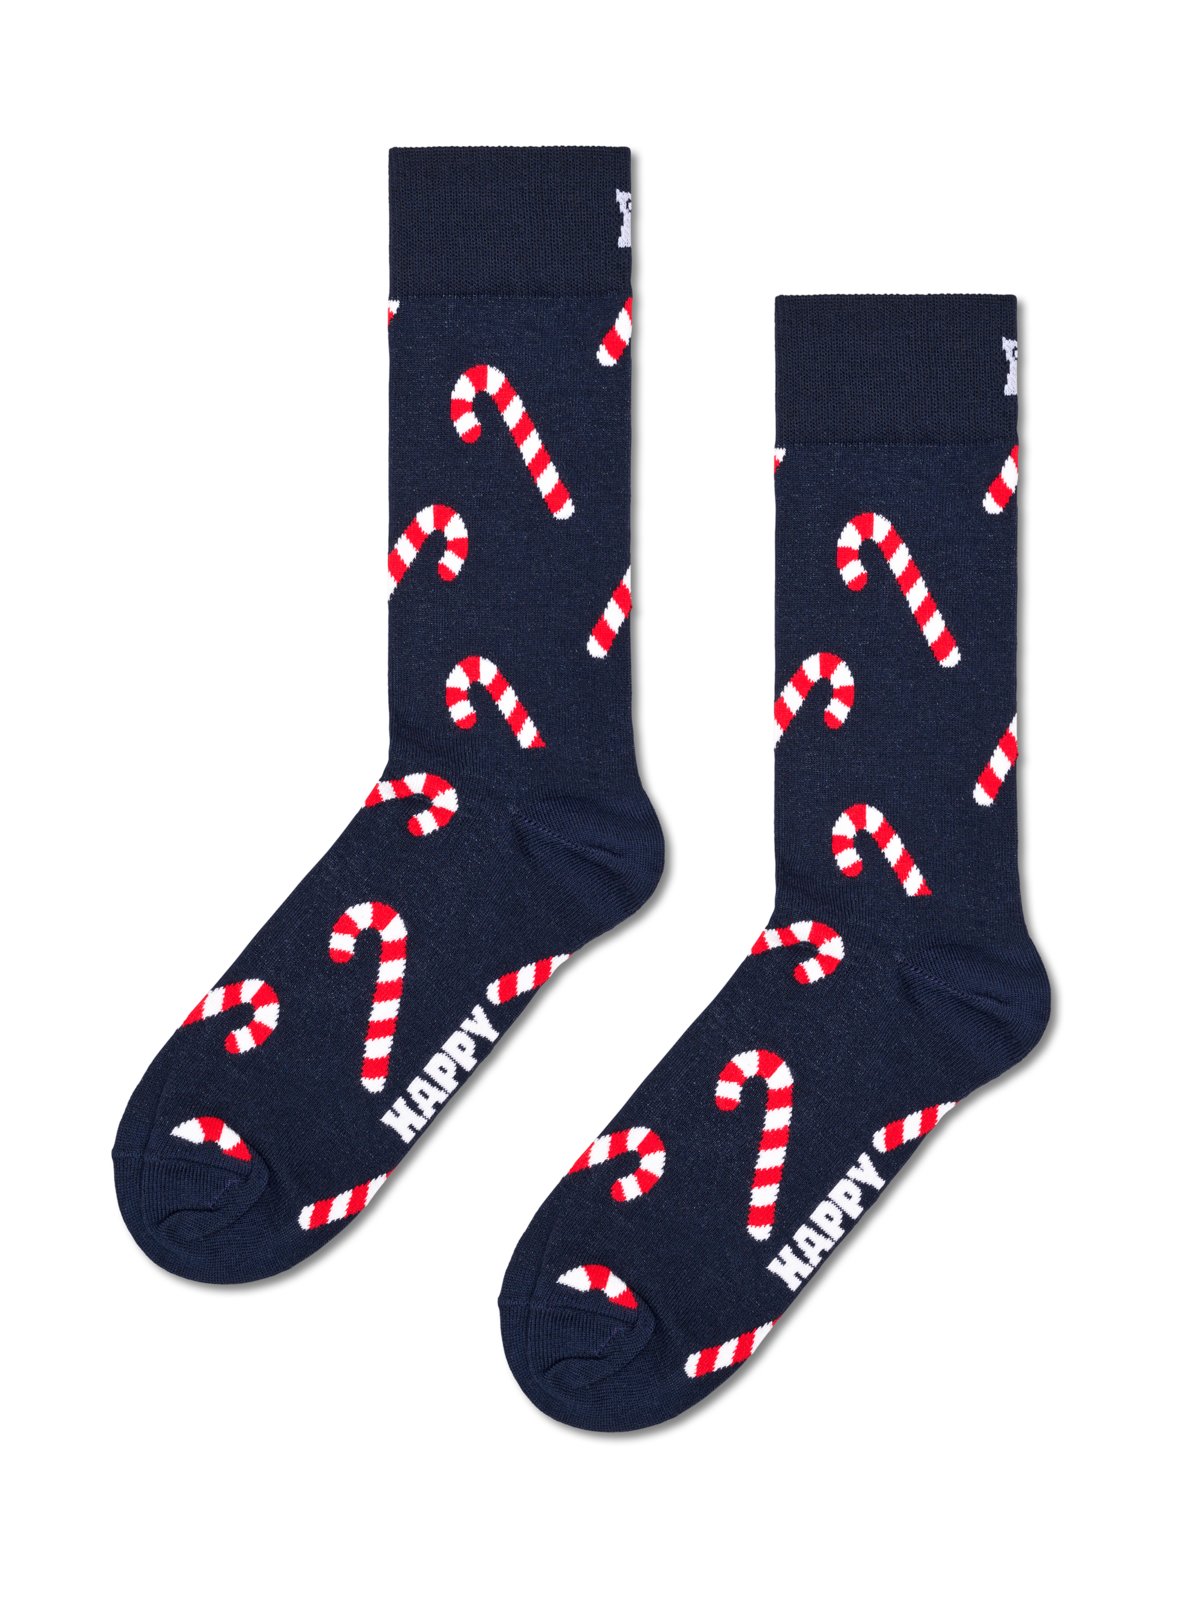 Happy Socks Mittelhohe Socken mit Zuckerstangen-Motiv